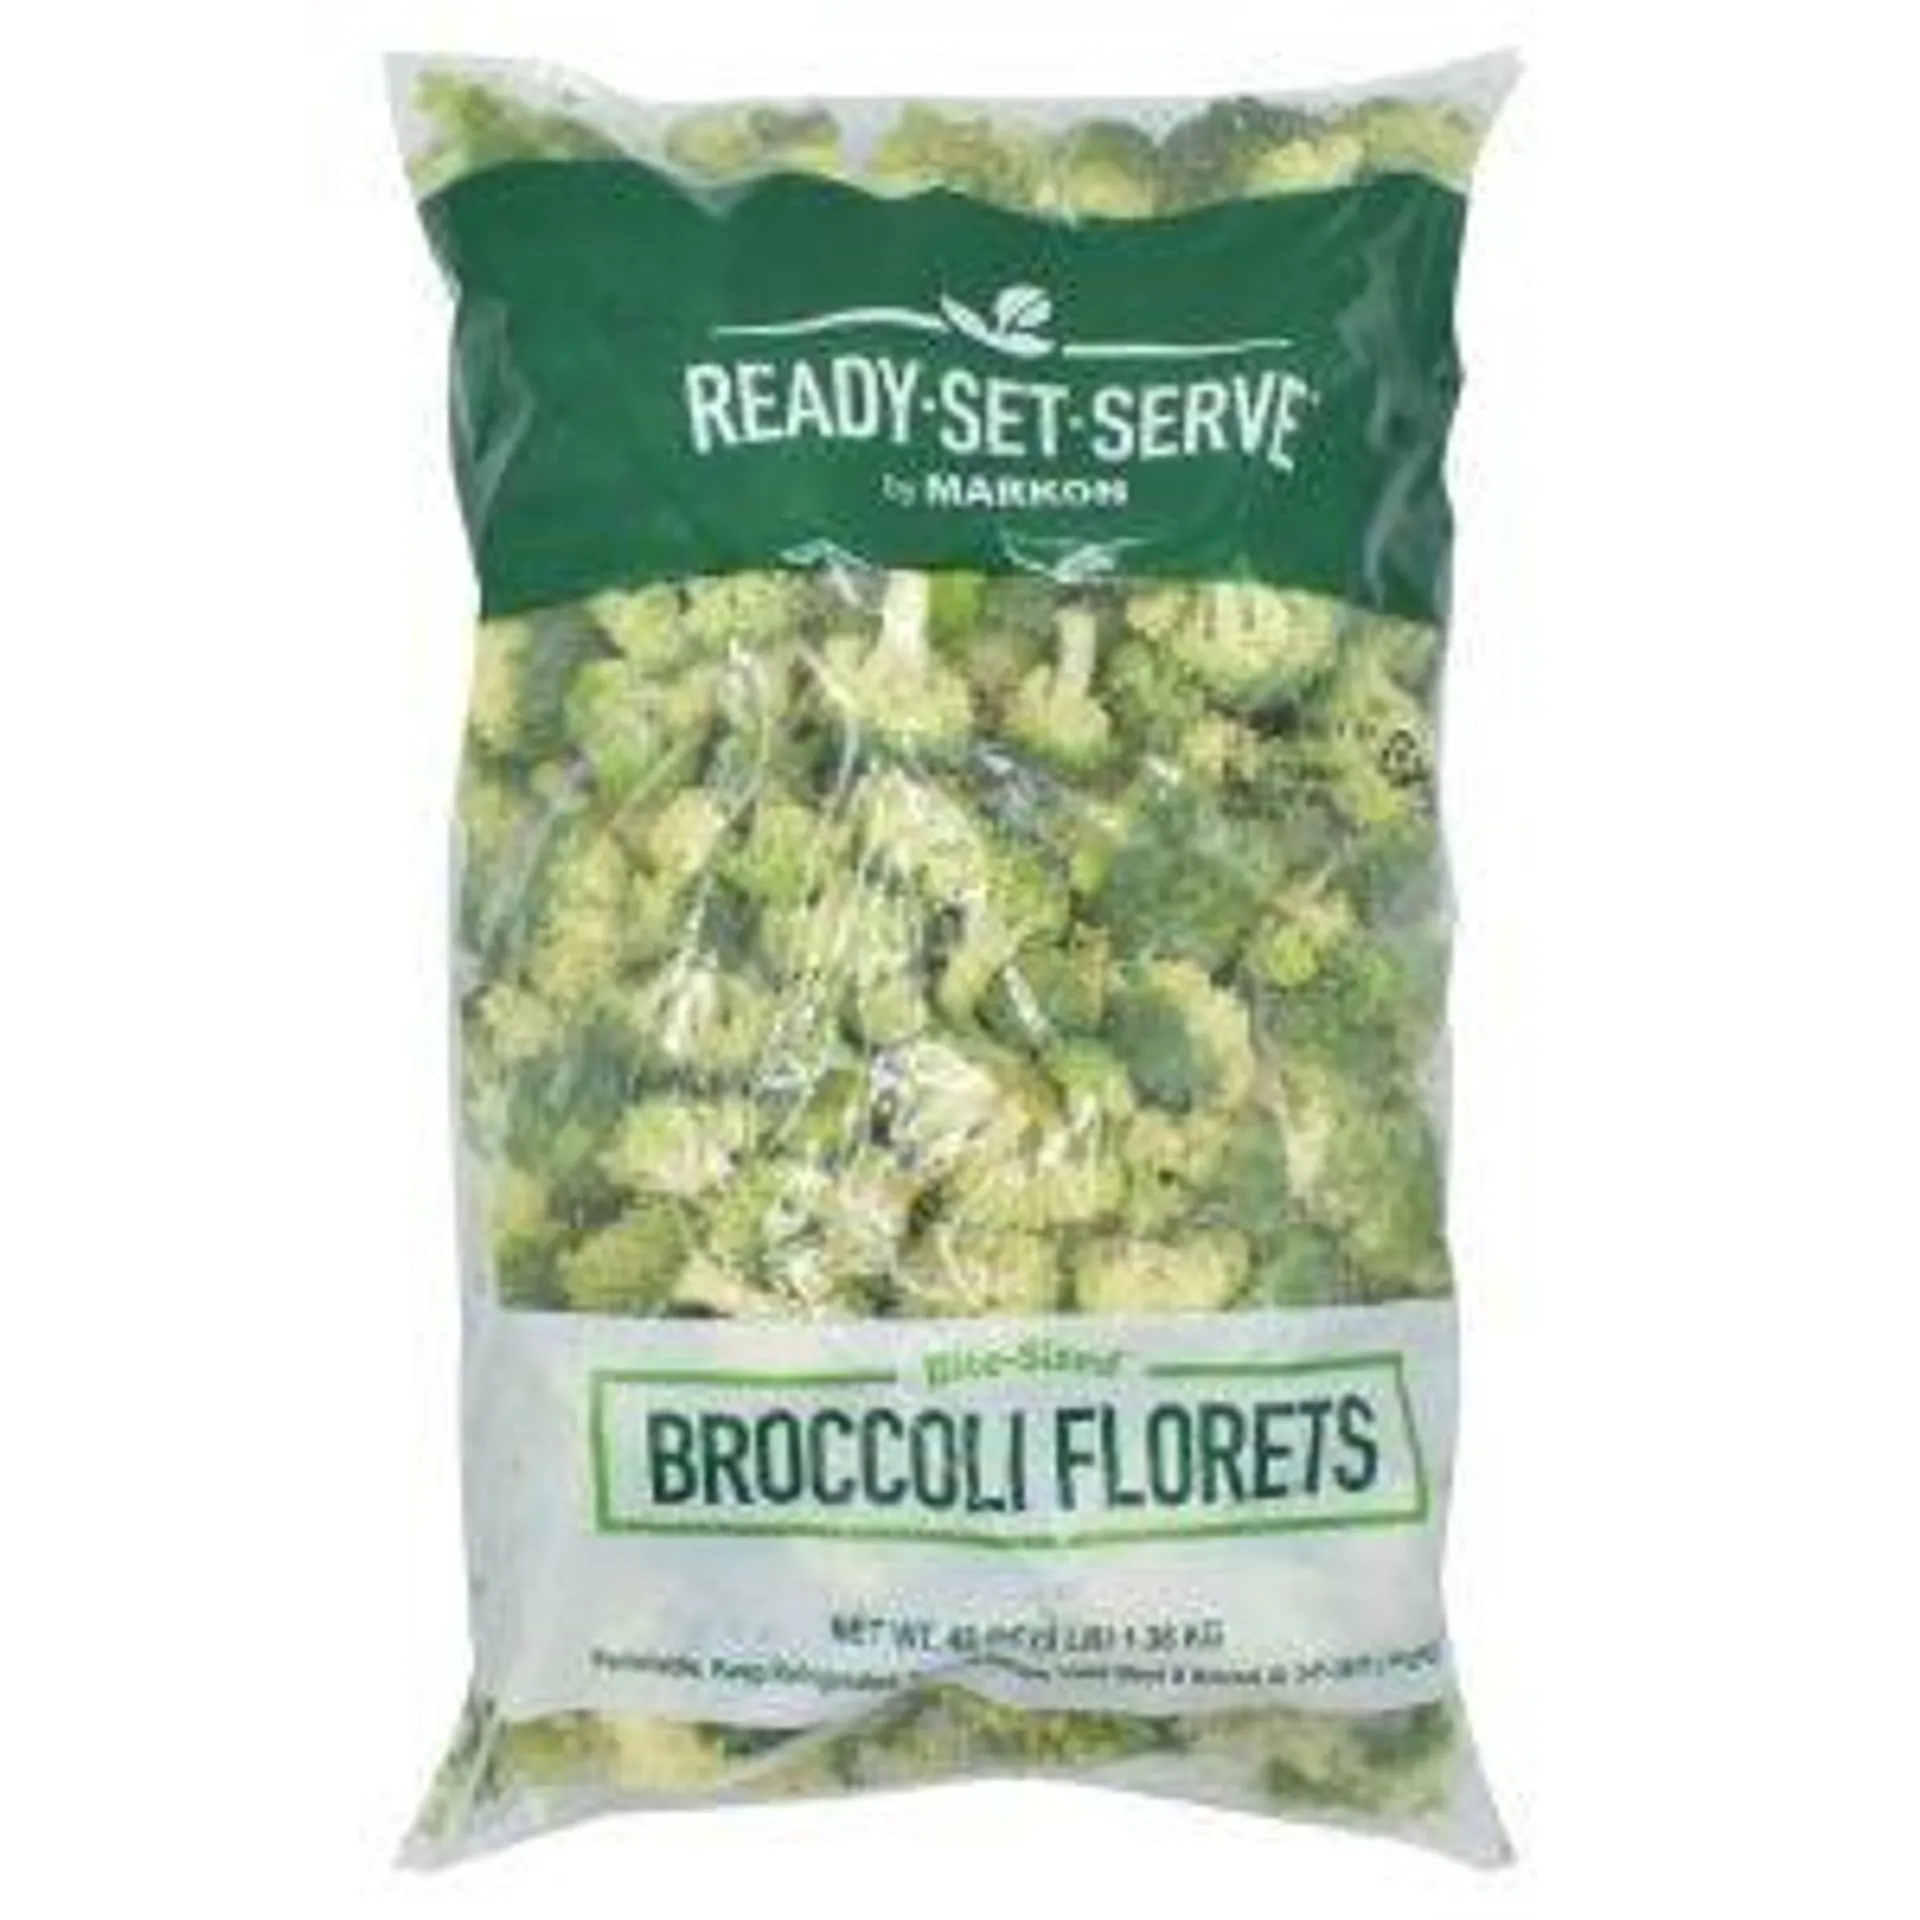 Bite-Sized Broccoli Florets